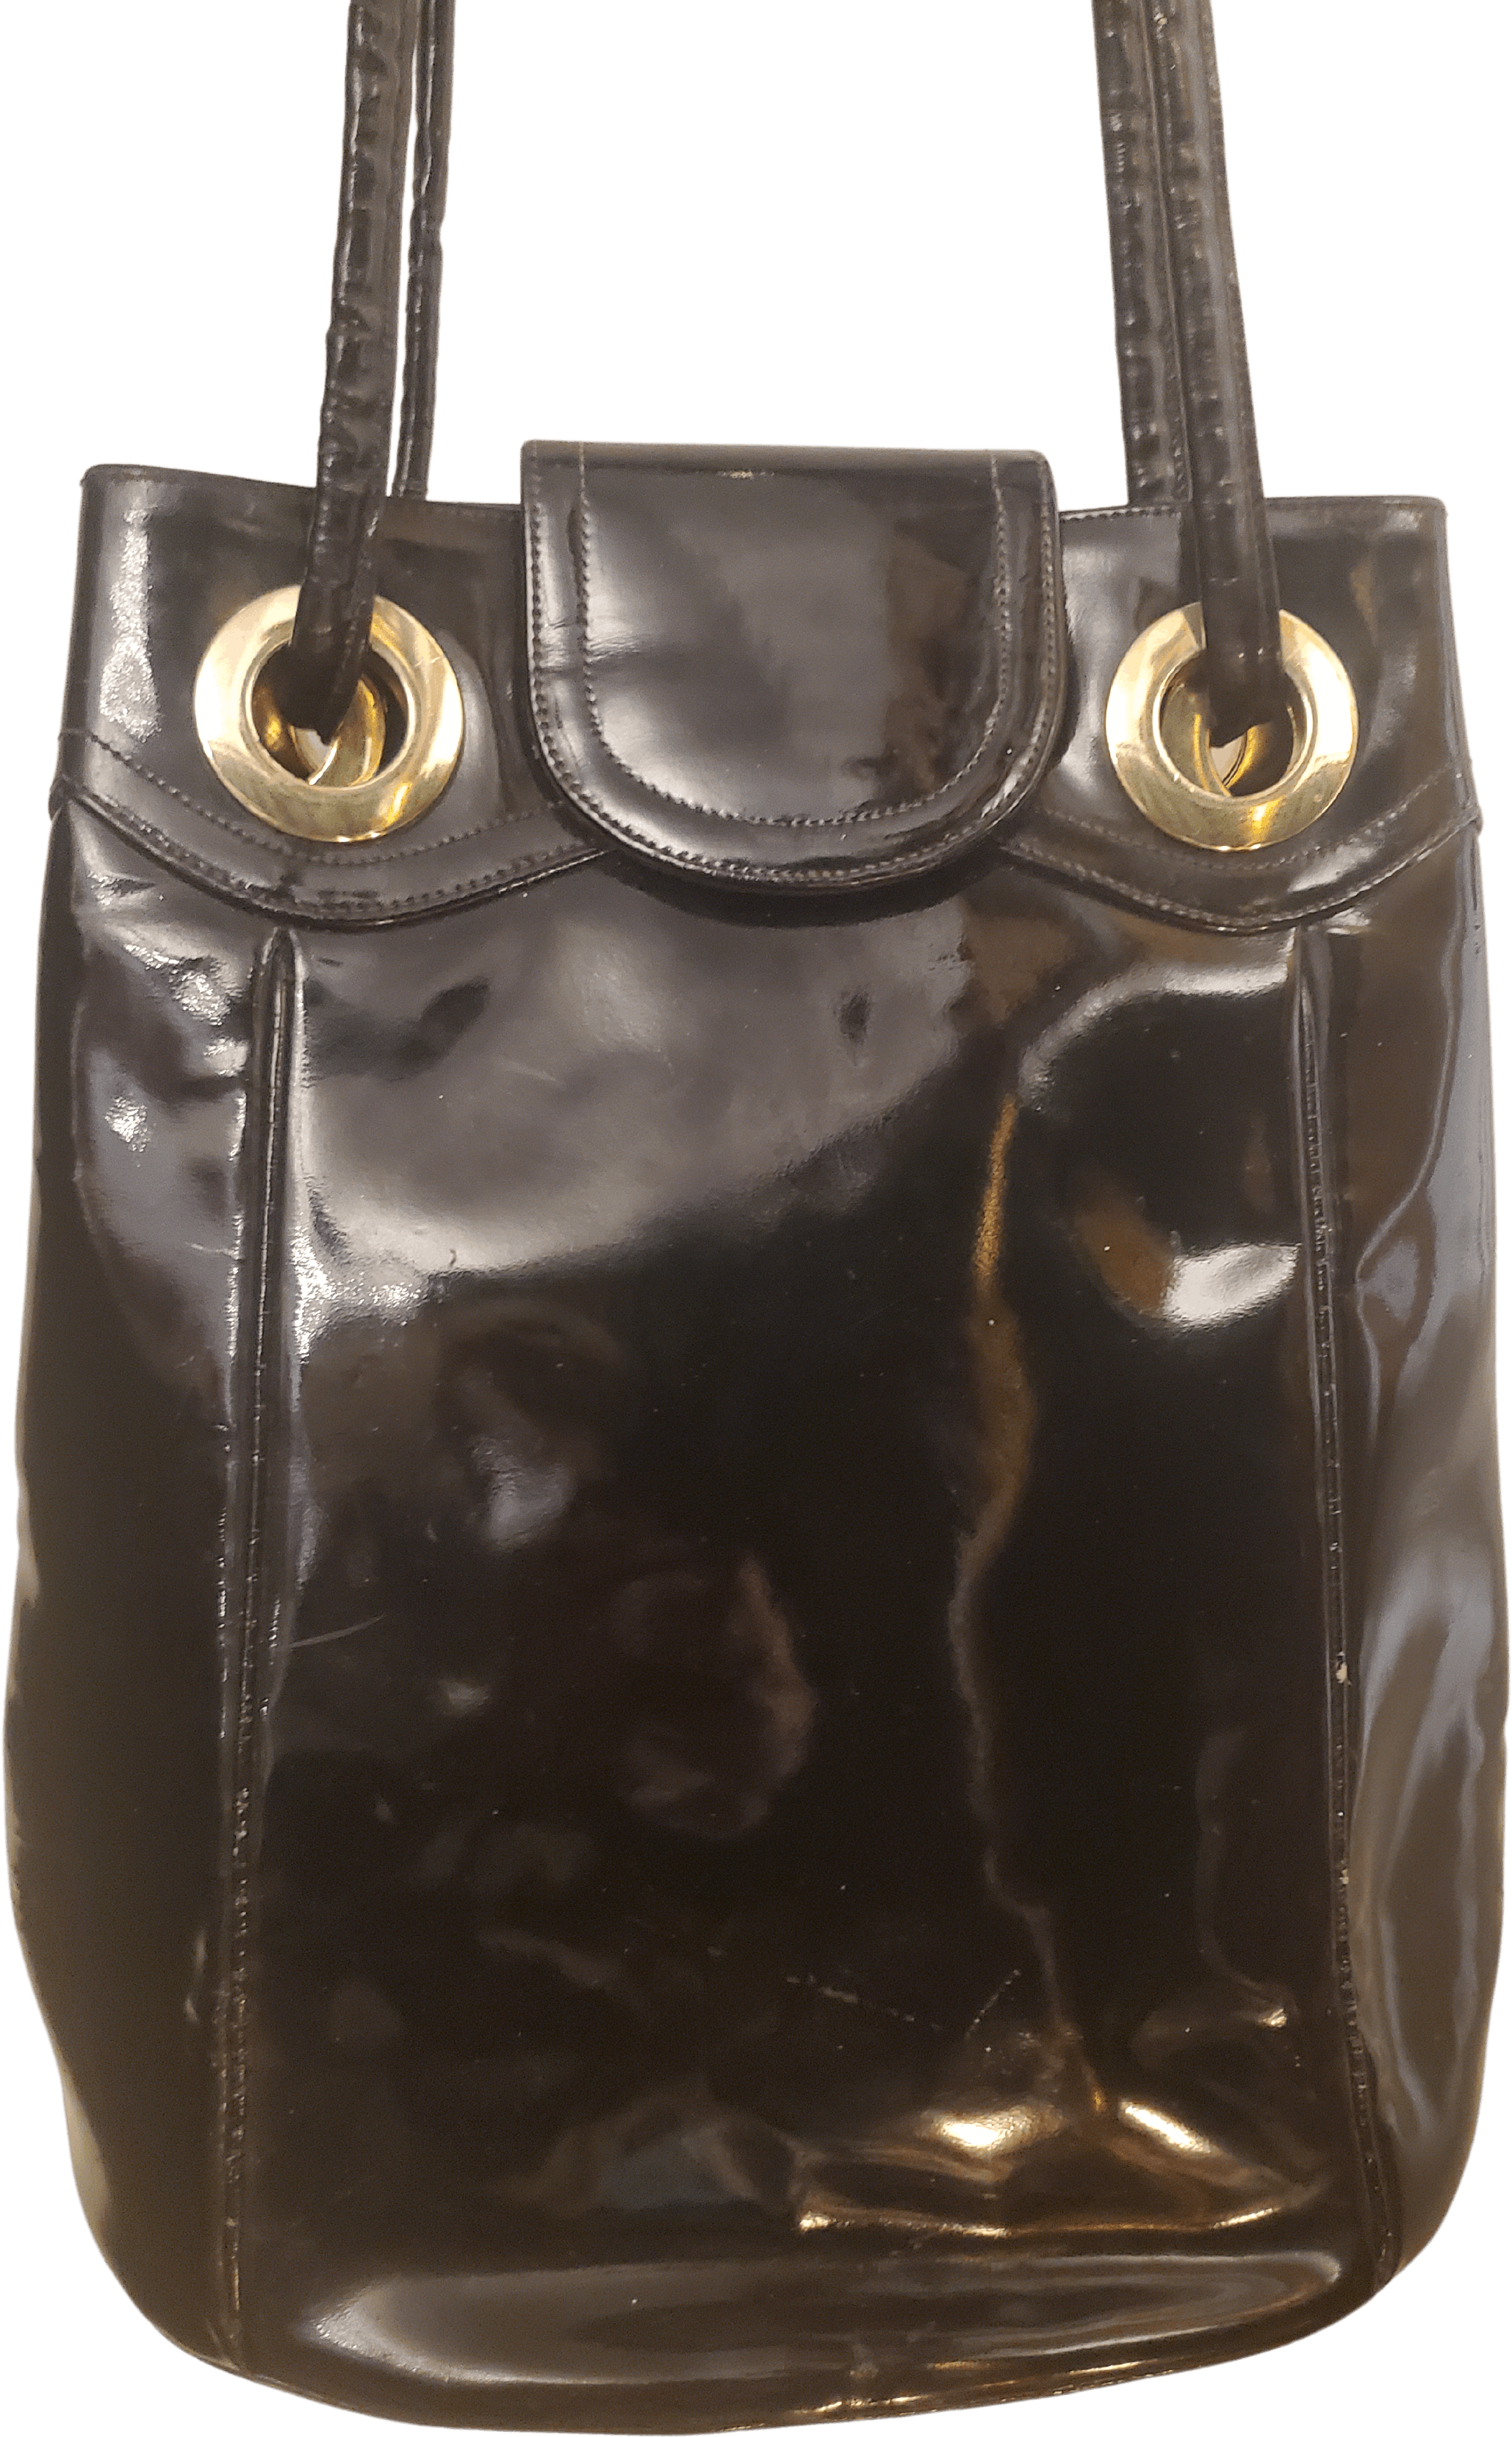 GUCCI Vintage Black Patent Leather Hand Bag 1940s Gucci